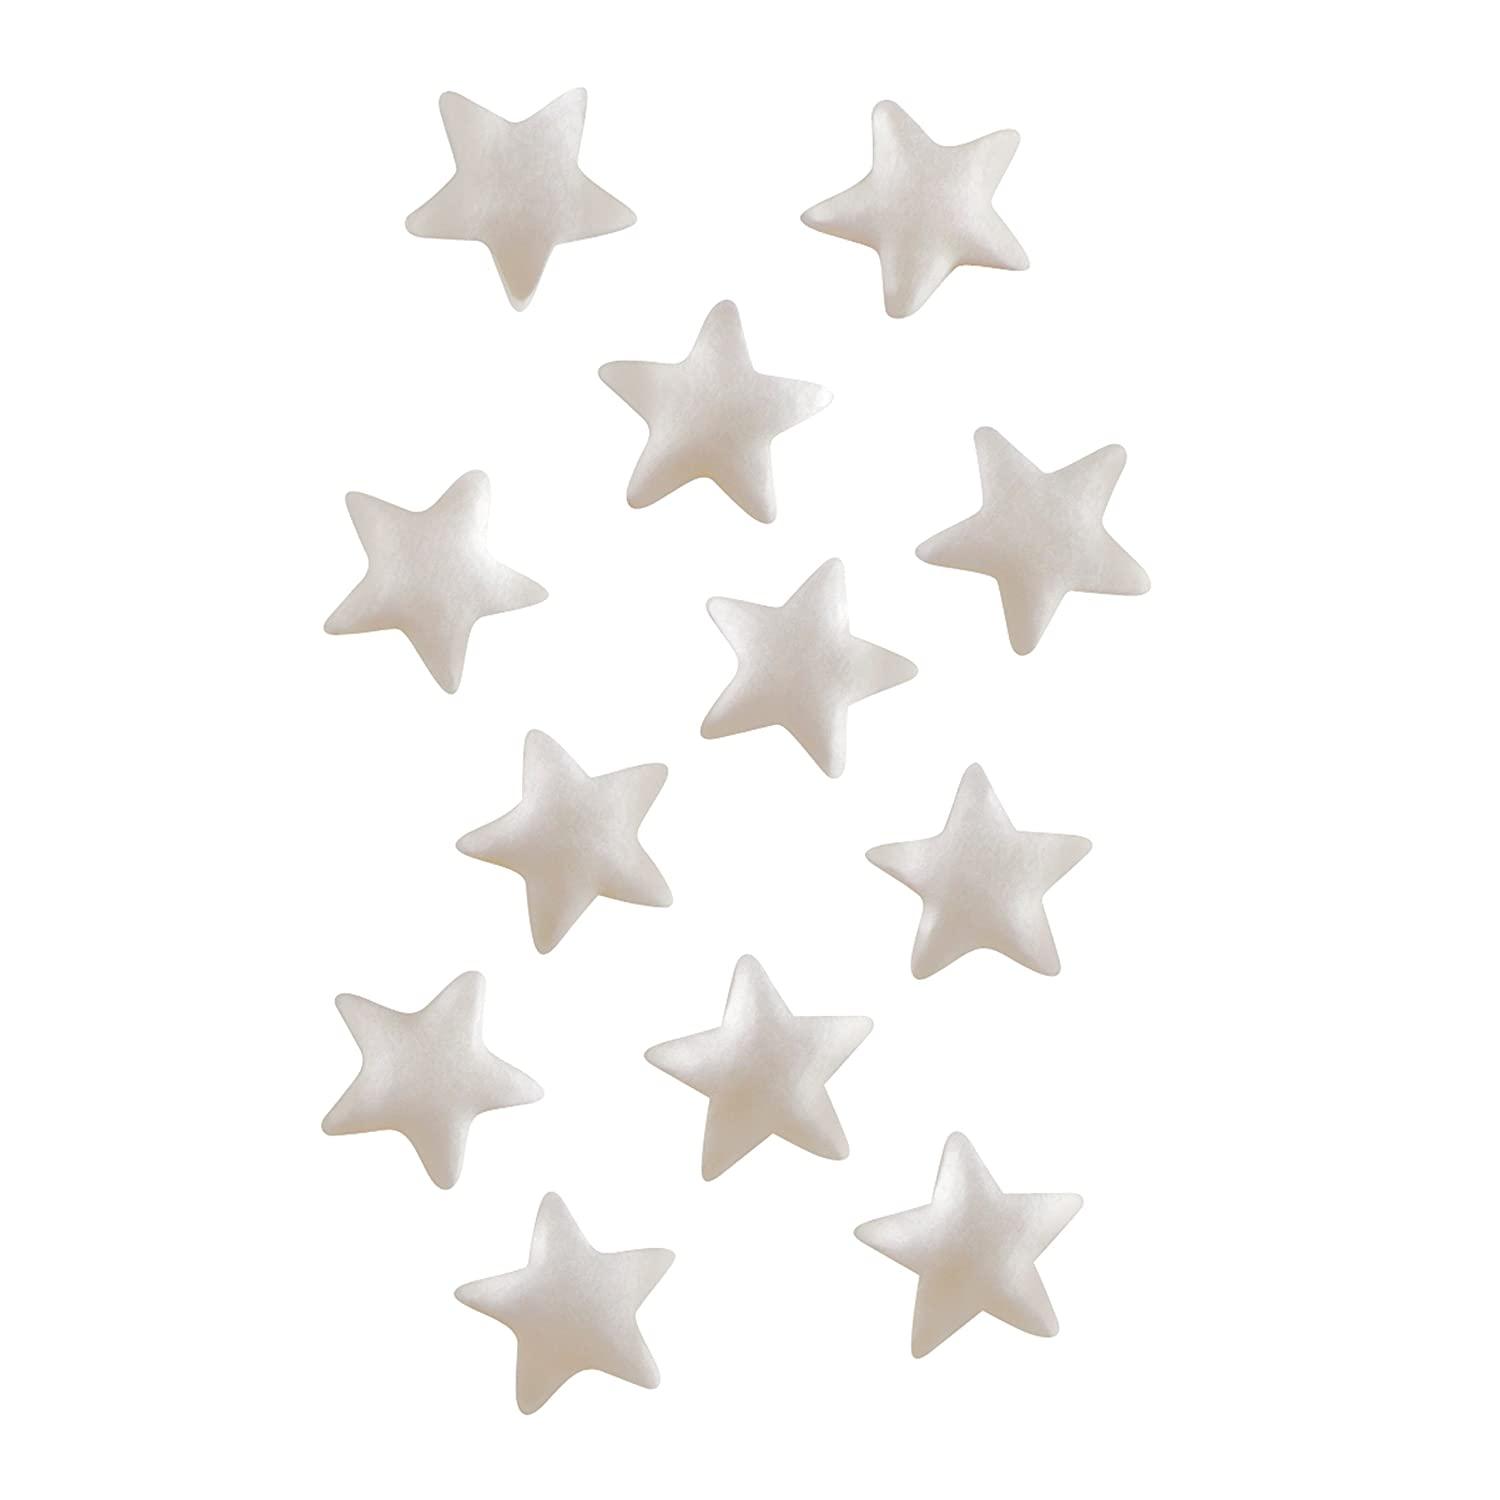 EDIBLE GLITTER STARS